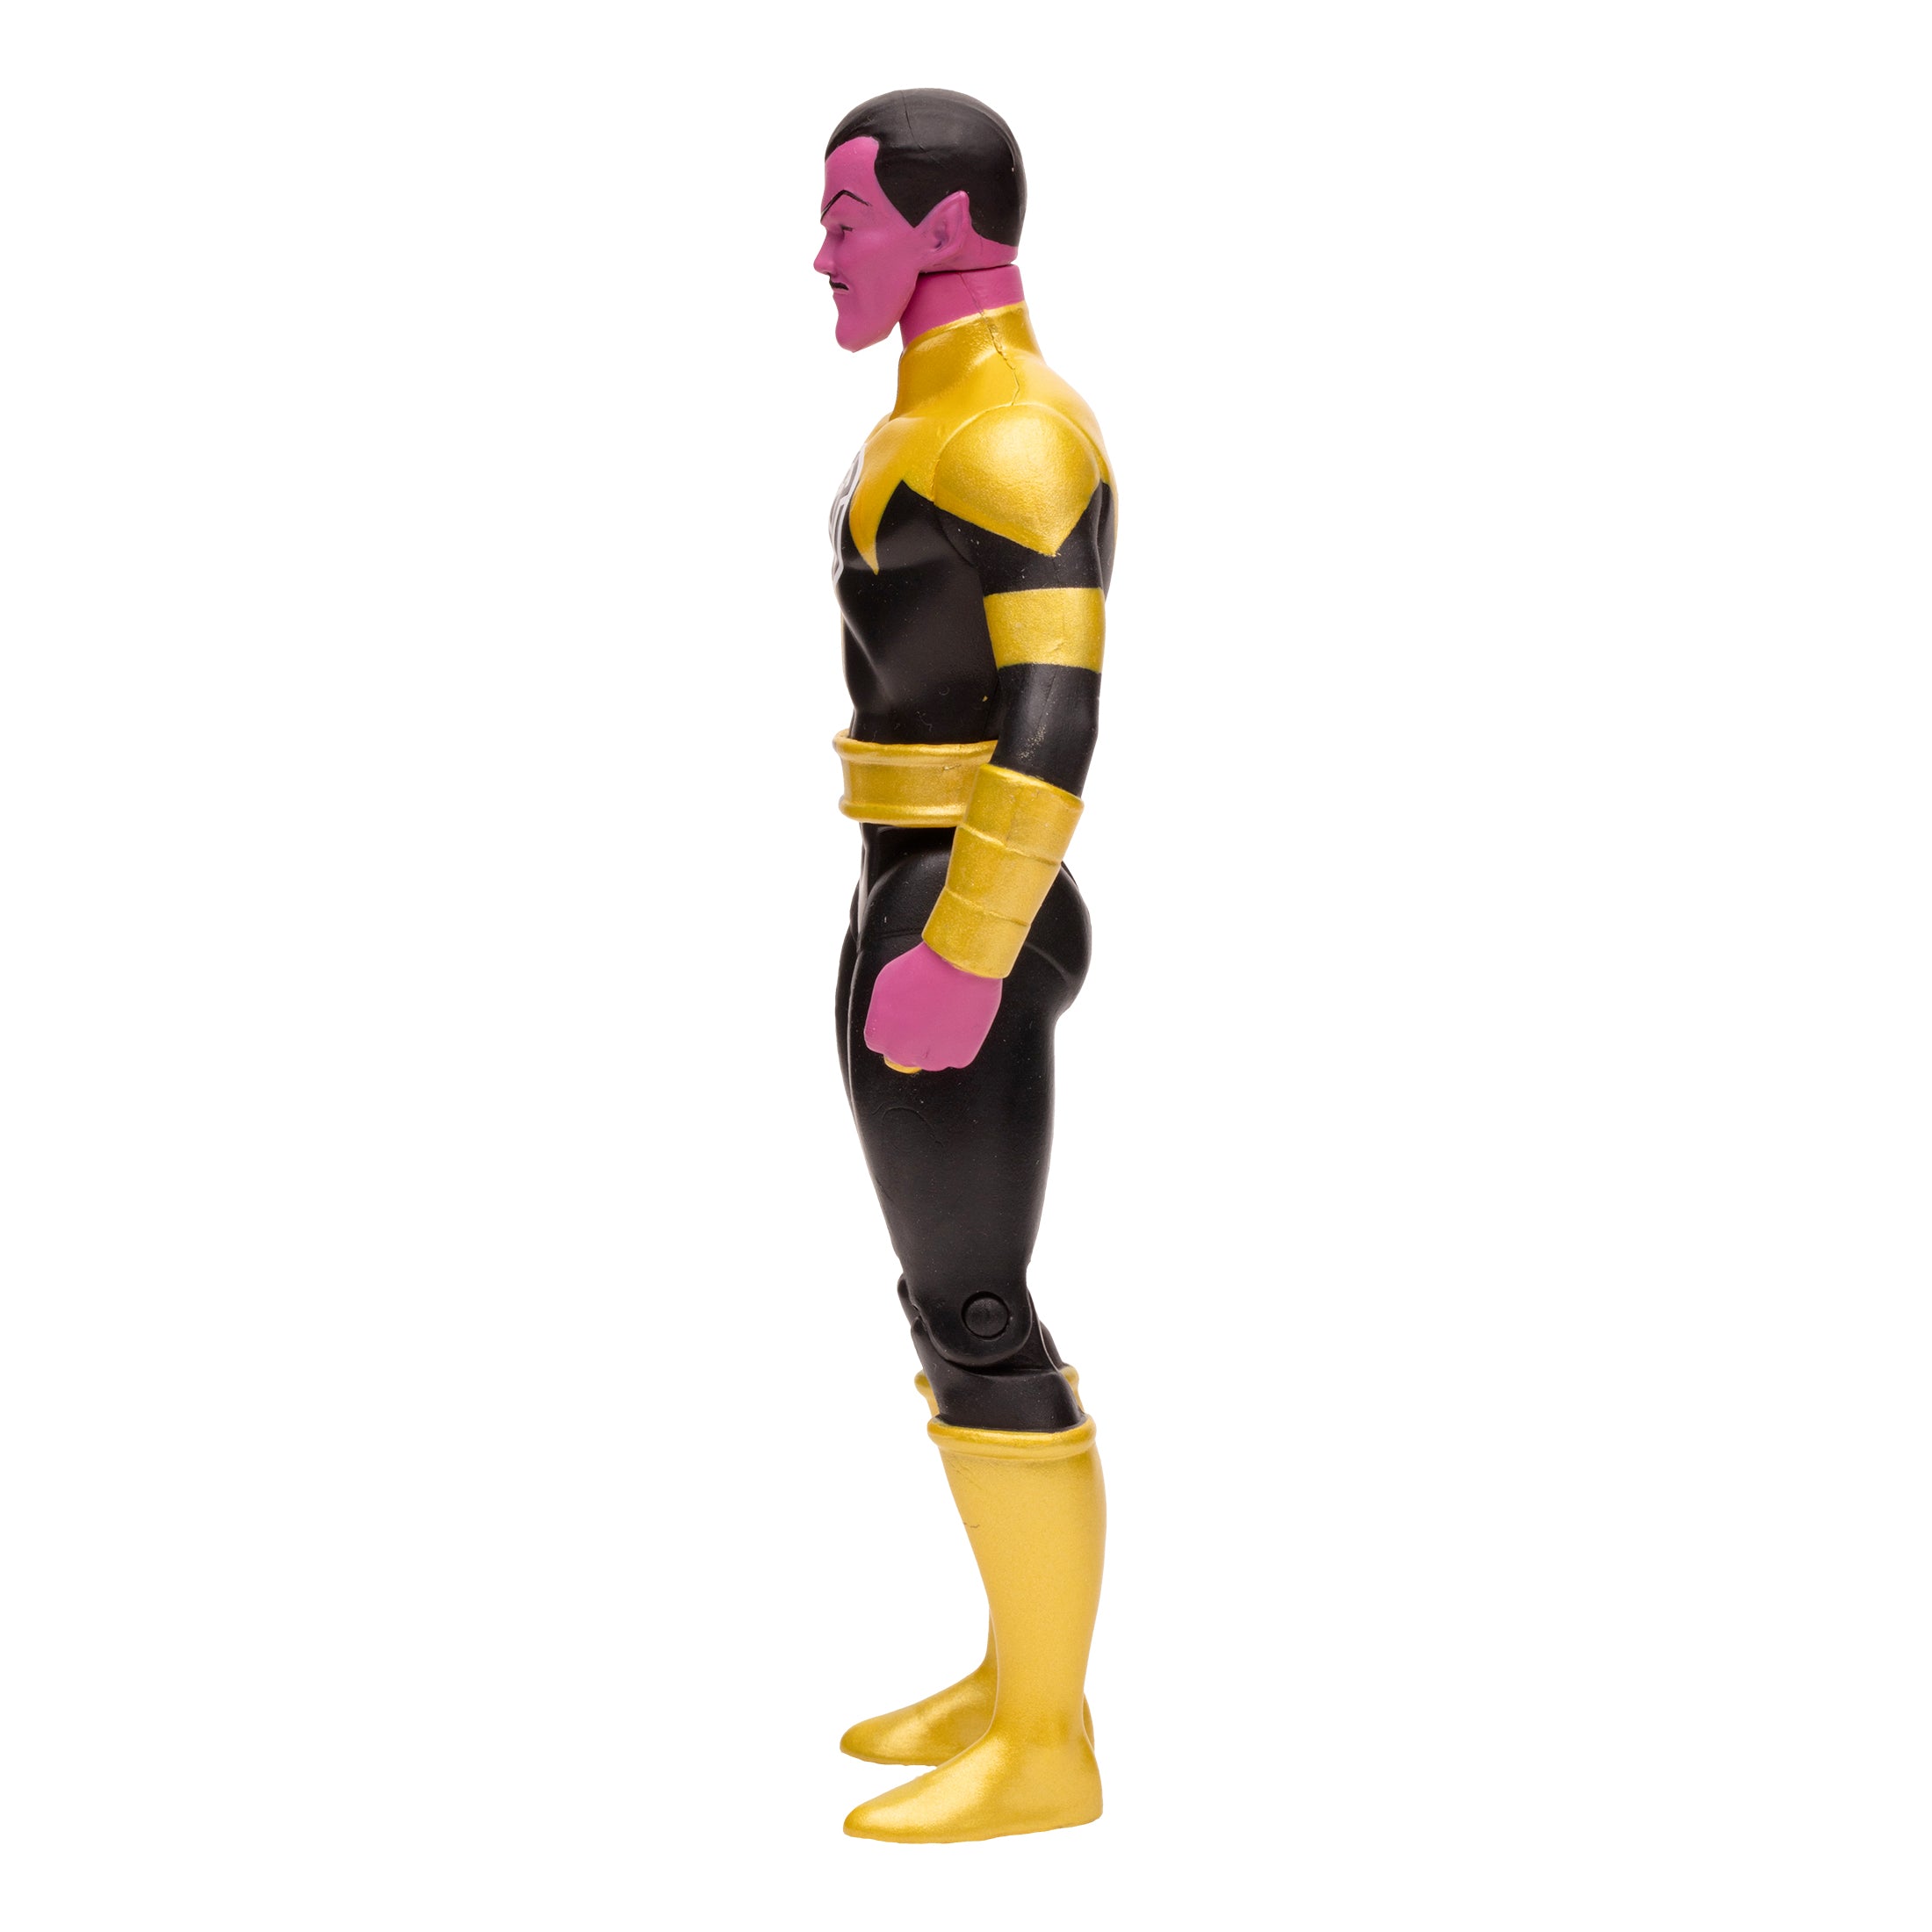 DC Direct Super Powers Figura de Accion: DC Comics Corps War - Sinestro 4.5 Pulgadas